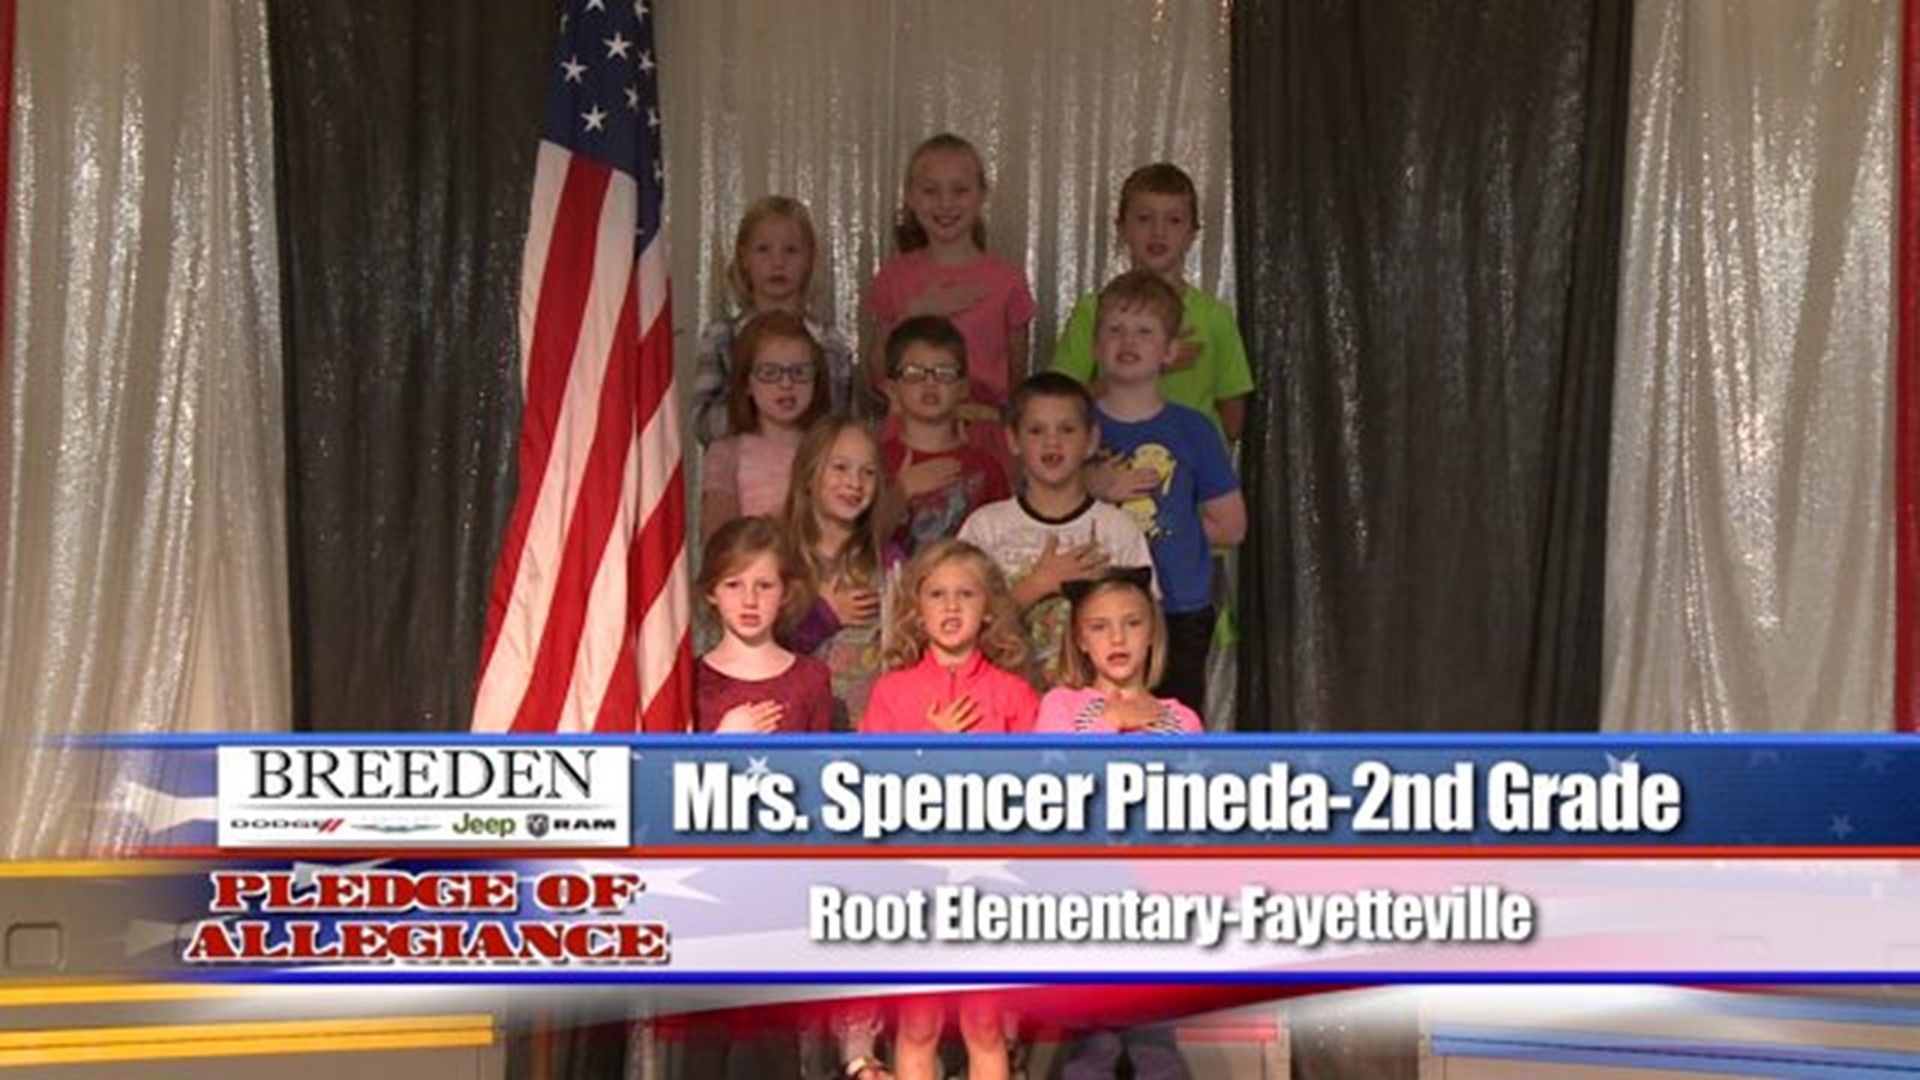 Root Elementary, Fayetteville - Mrs. Spencer Pineda - 2nd Grade